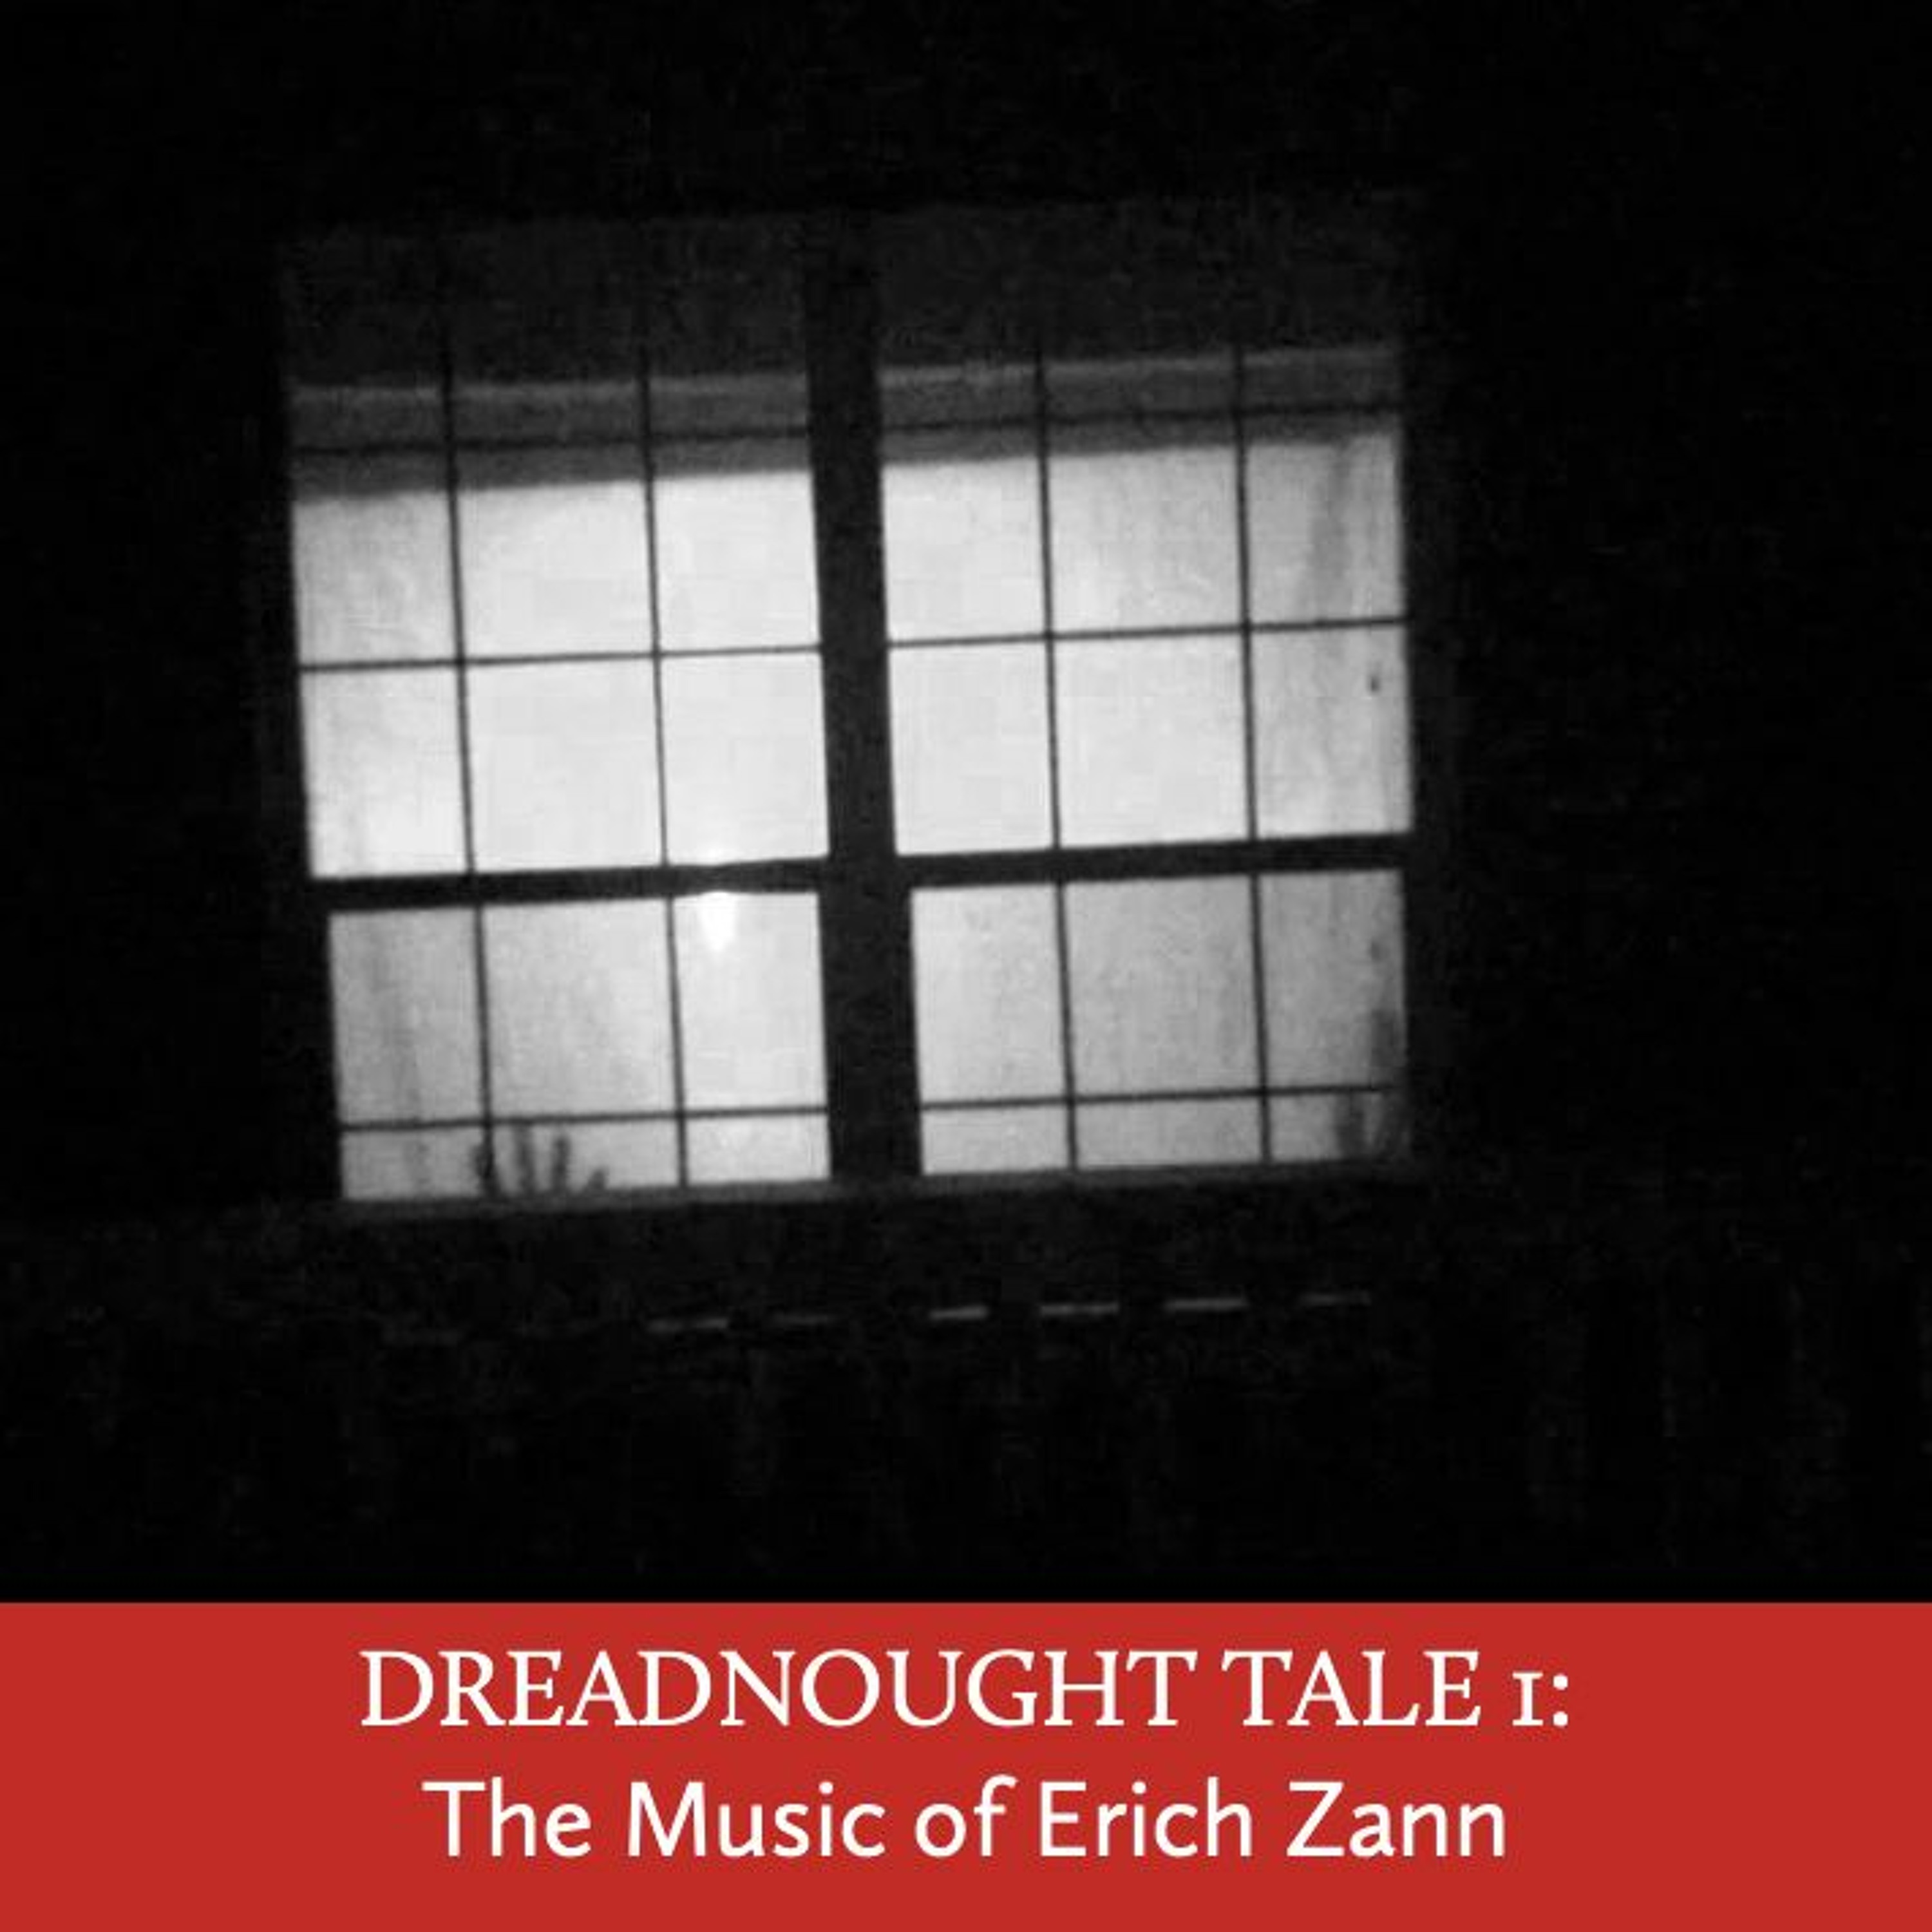 Dreadnought Tale 1: The Music of Erich Zann